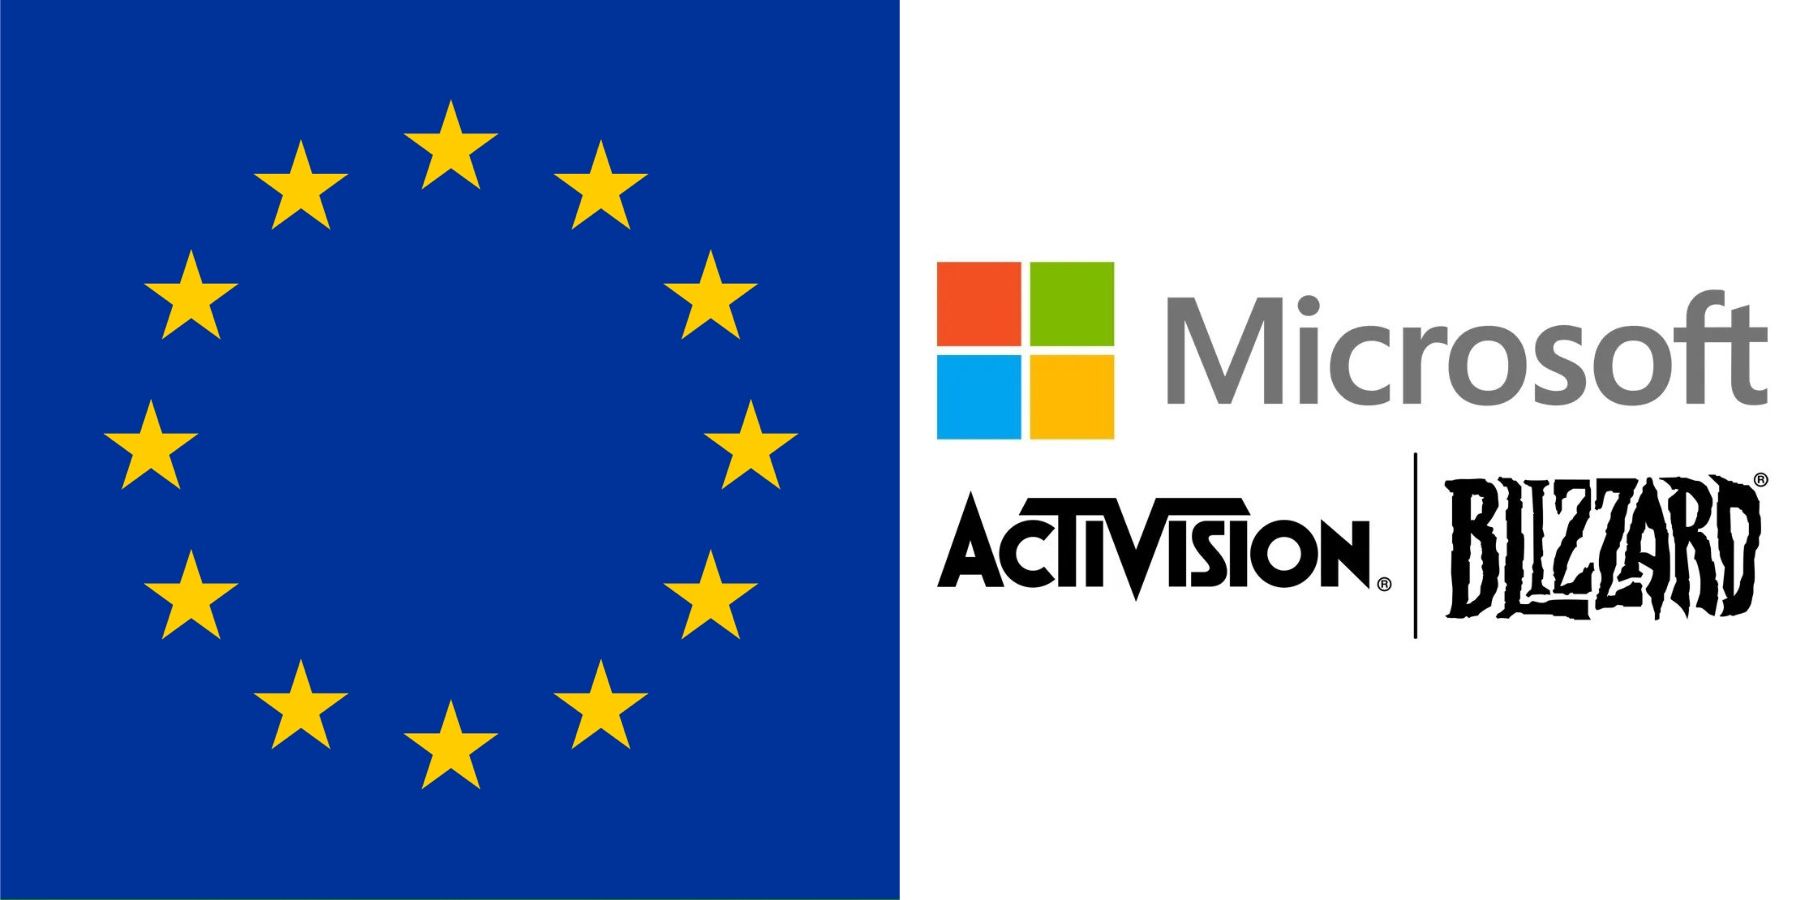 EU Flag Microsoft Activision Blizzard Acquisition GR featured